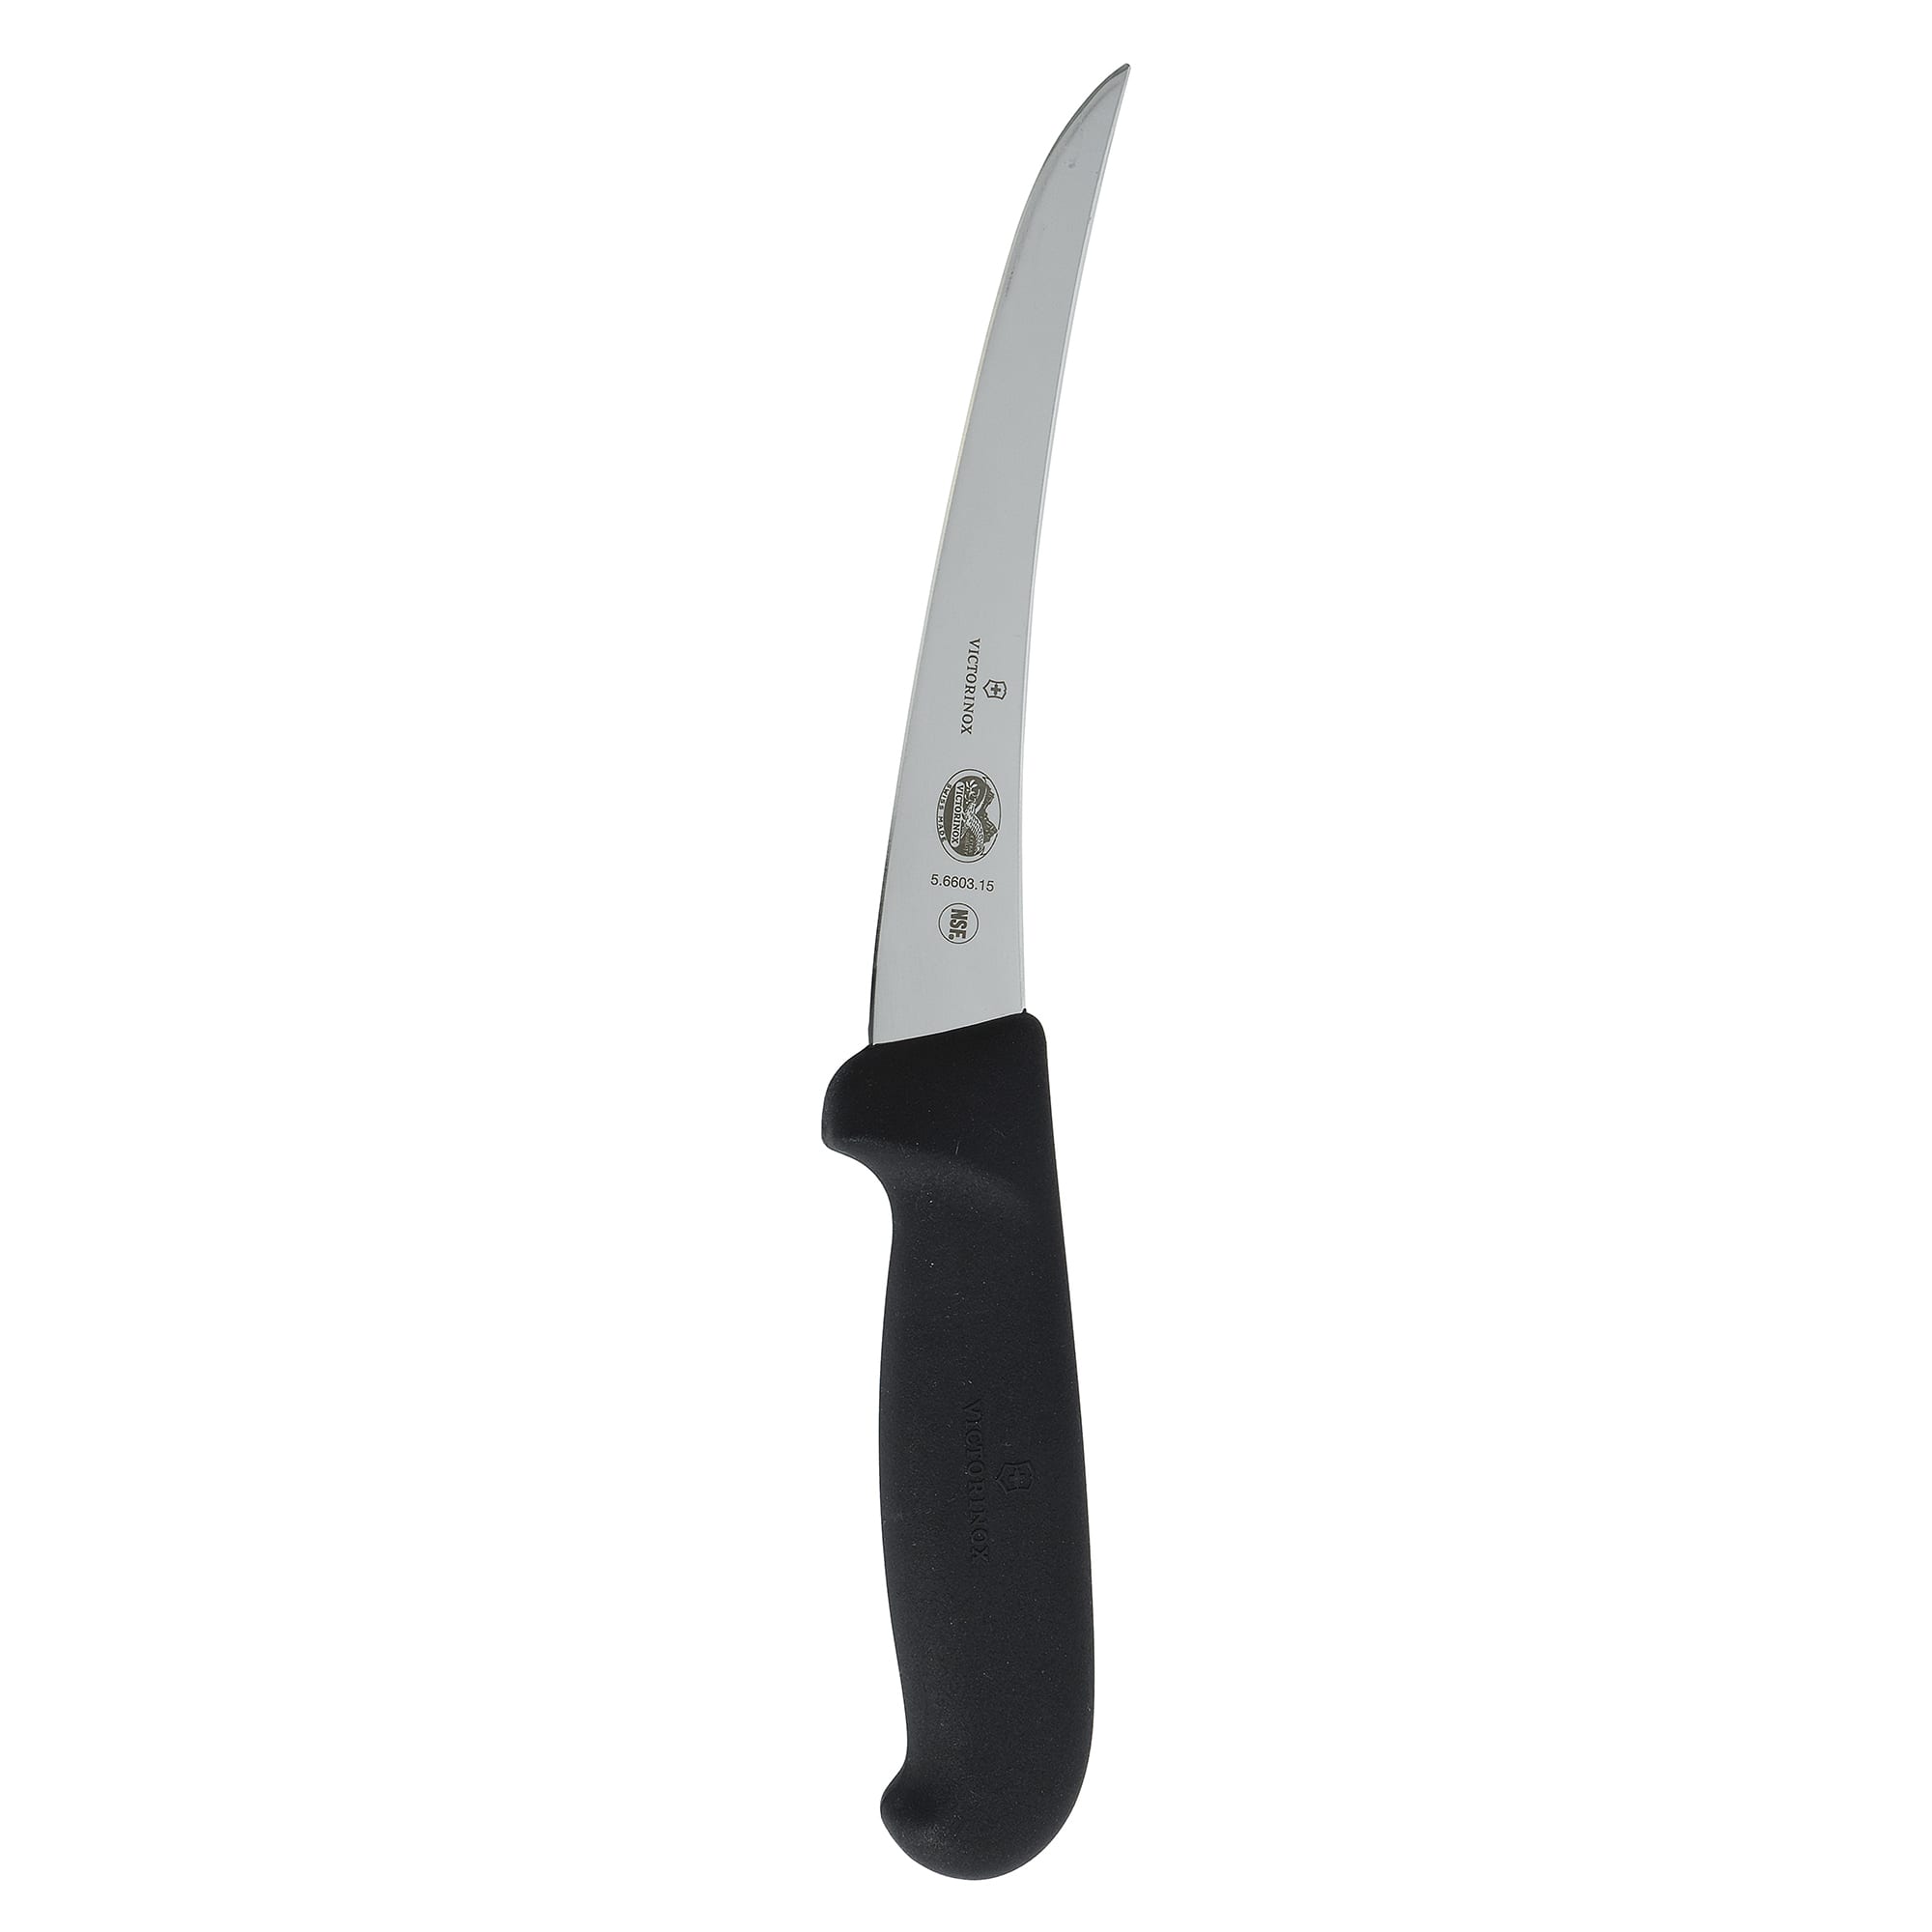 Victorinox Swiss Army Forschner 6-piece Steak Knife Set Large Fibrox Handle  - KnifeCenter - 46789 - Discontinued